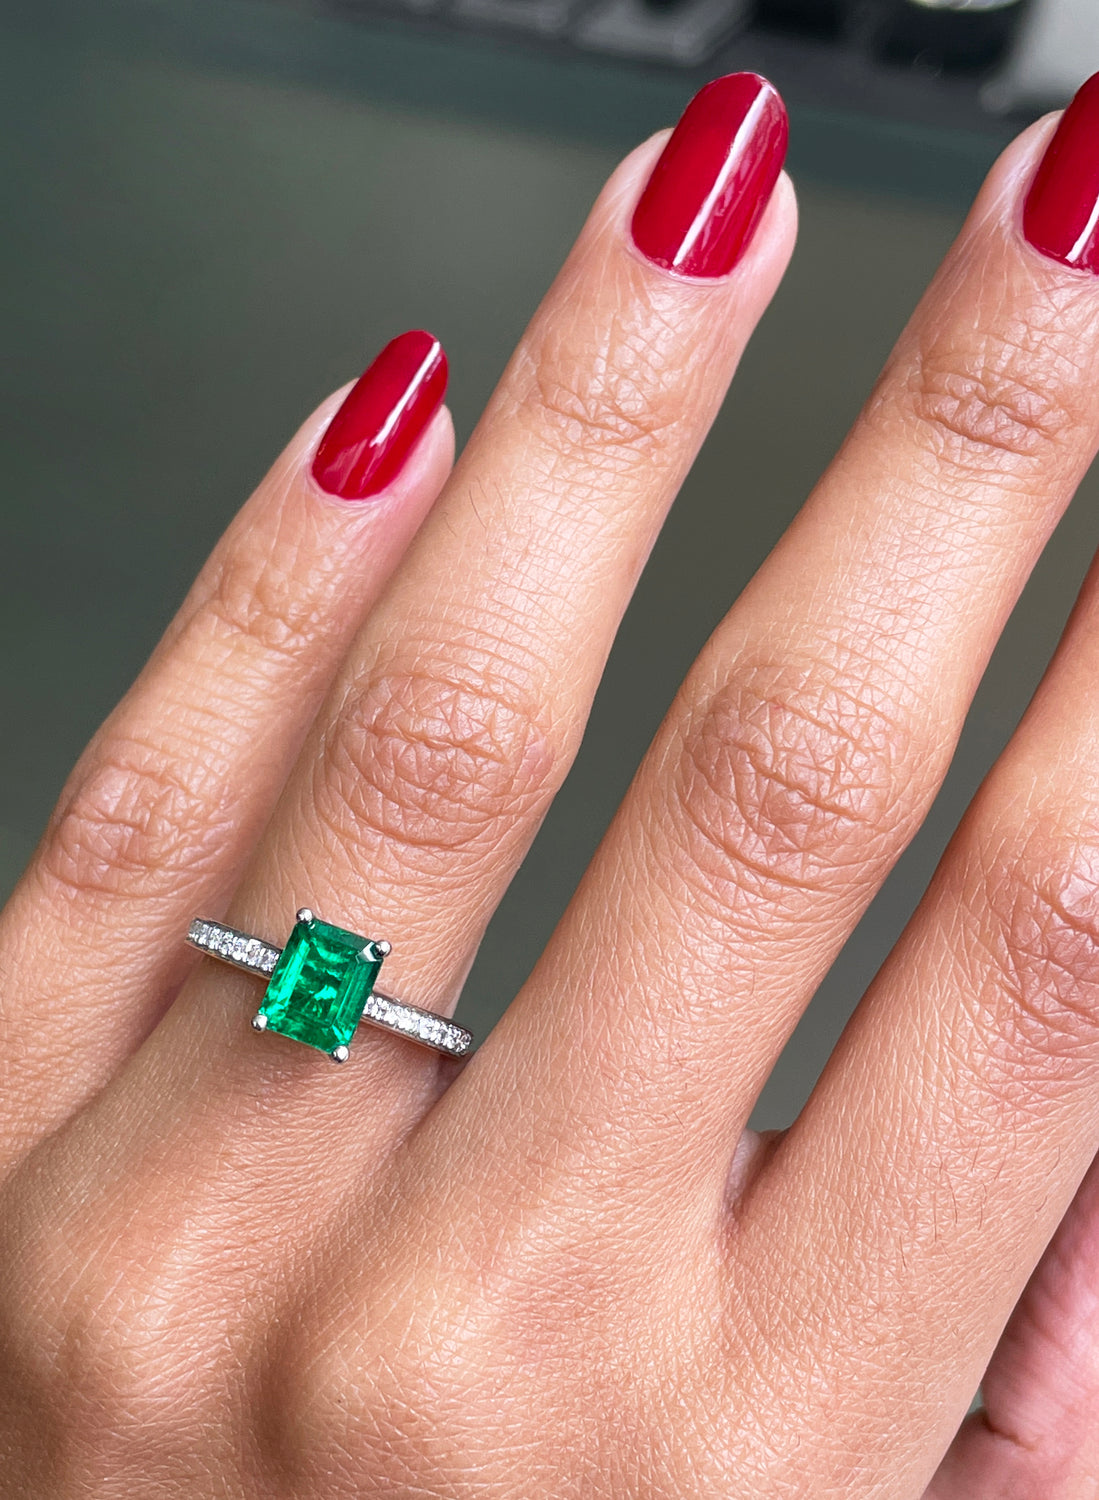 1.36 Carat Emerald Cut Emerald and Diamond Platinum Engagement Ring